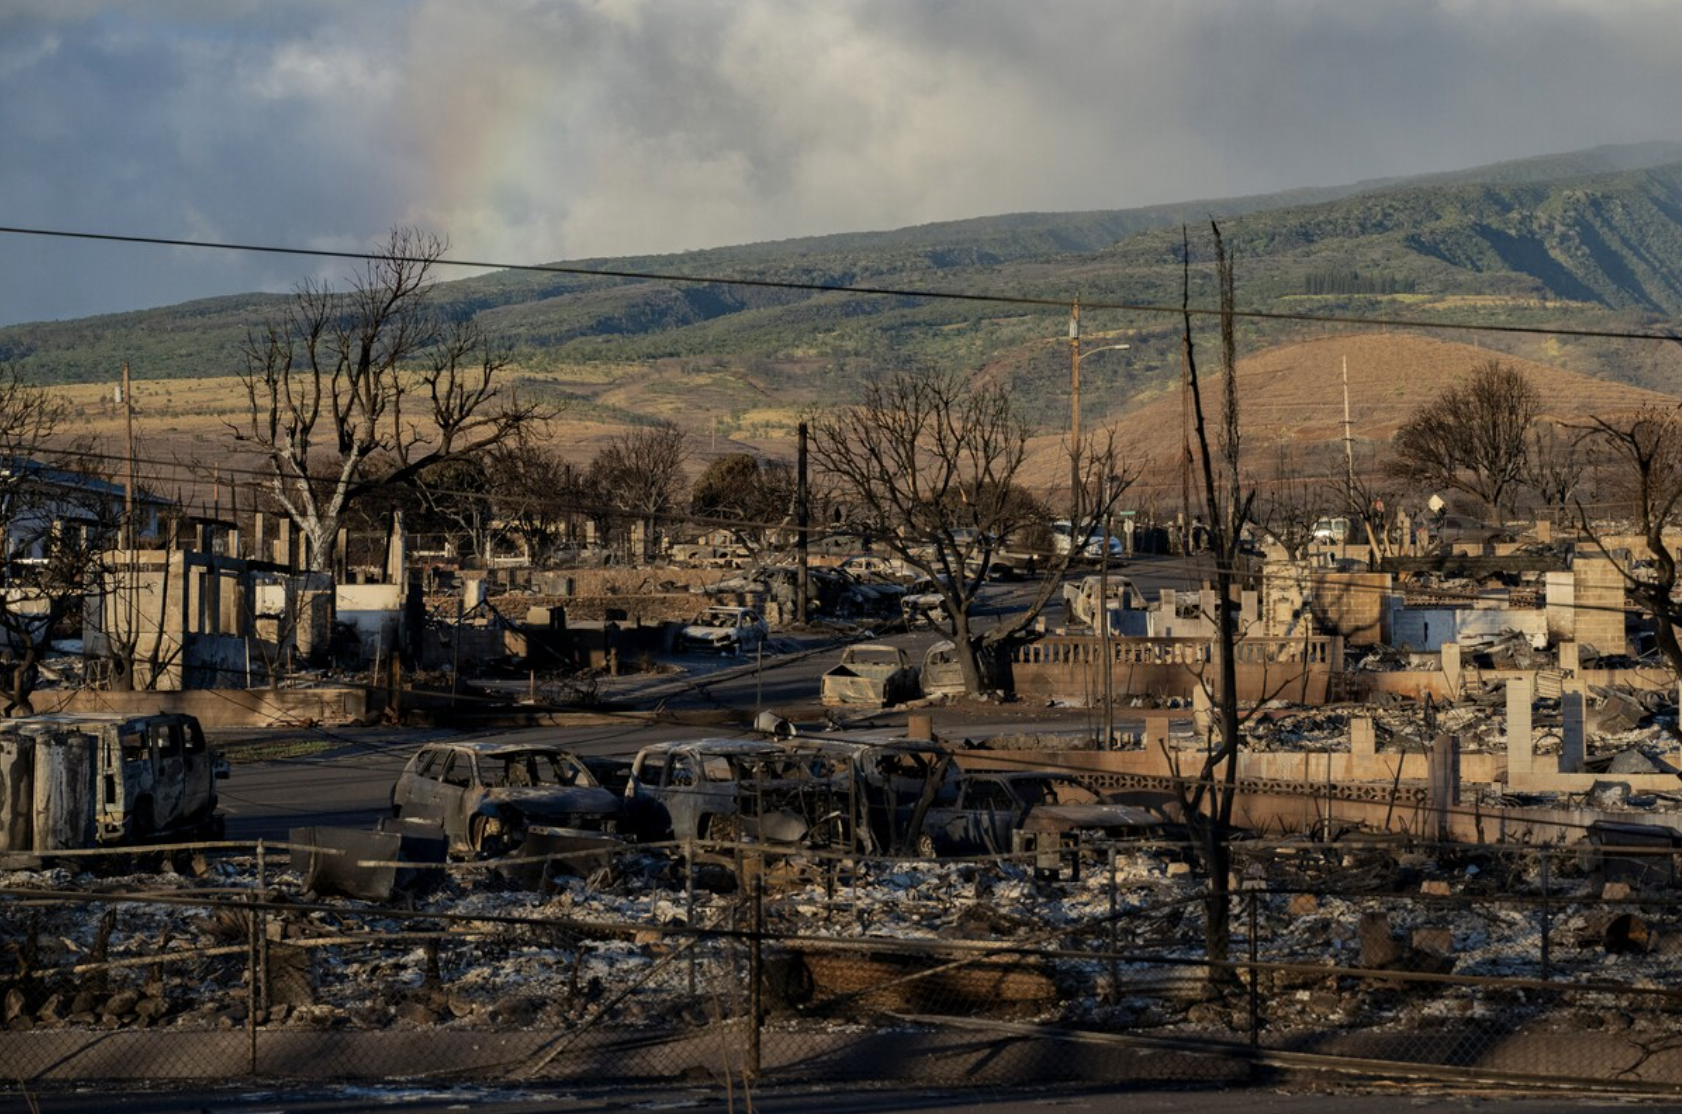 Hawaii residents fear losing Lahaina as fires make housing crisis worse (washingtonpost.com)